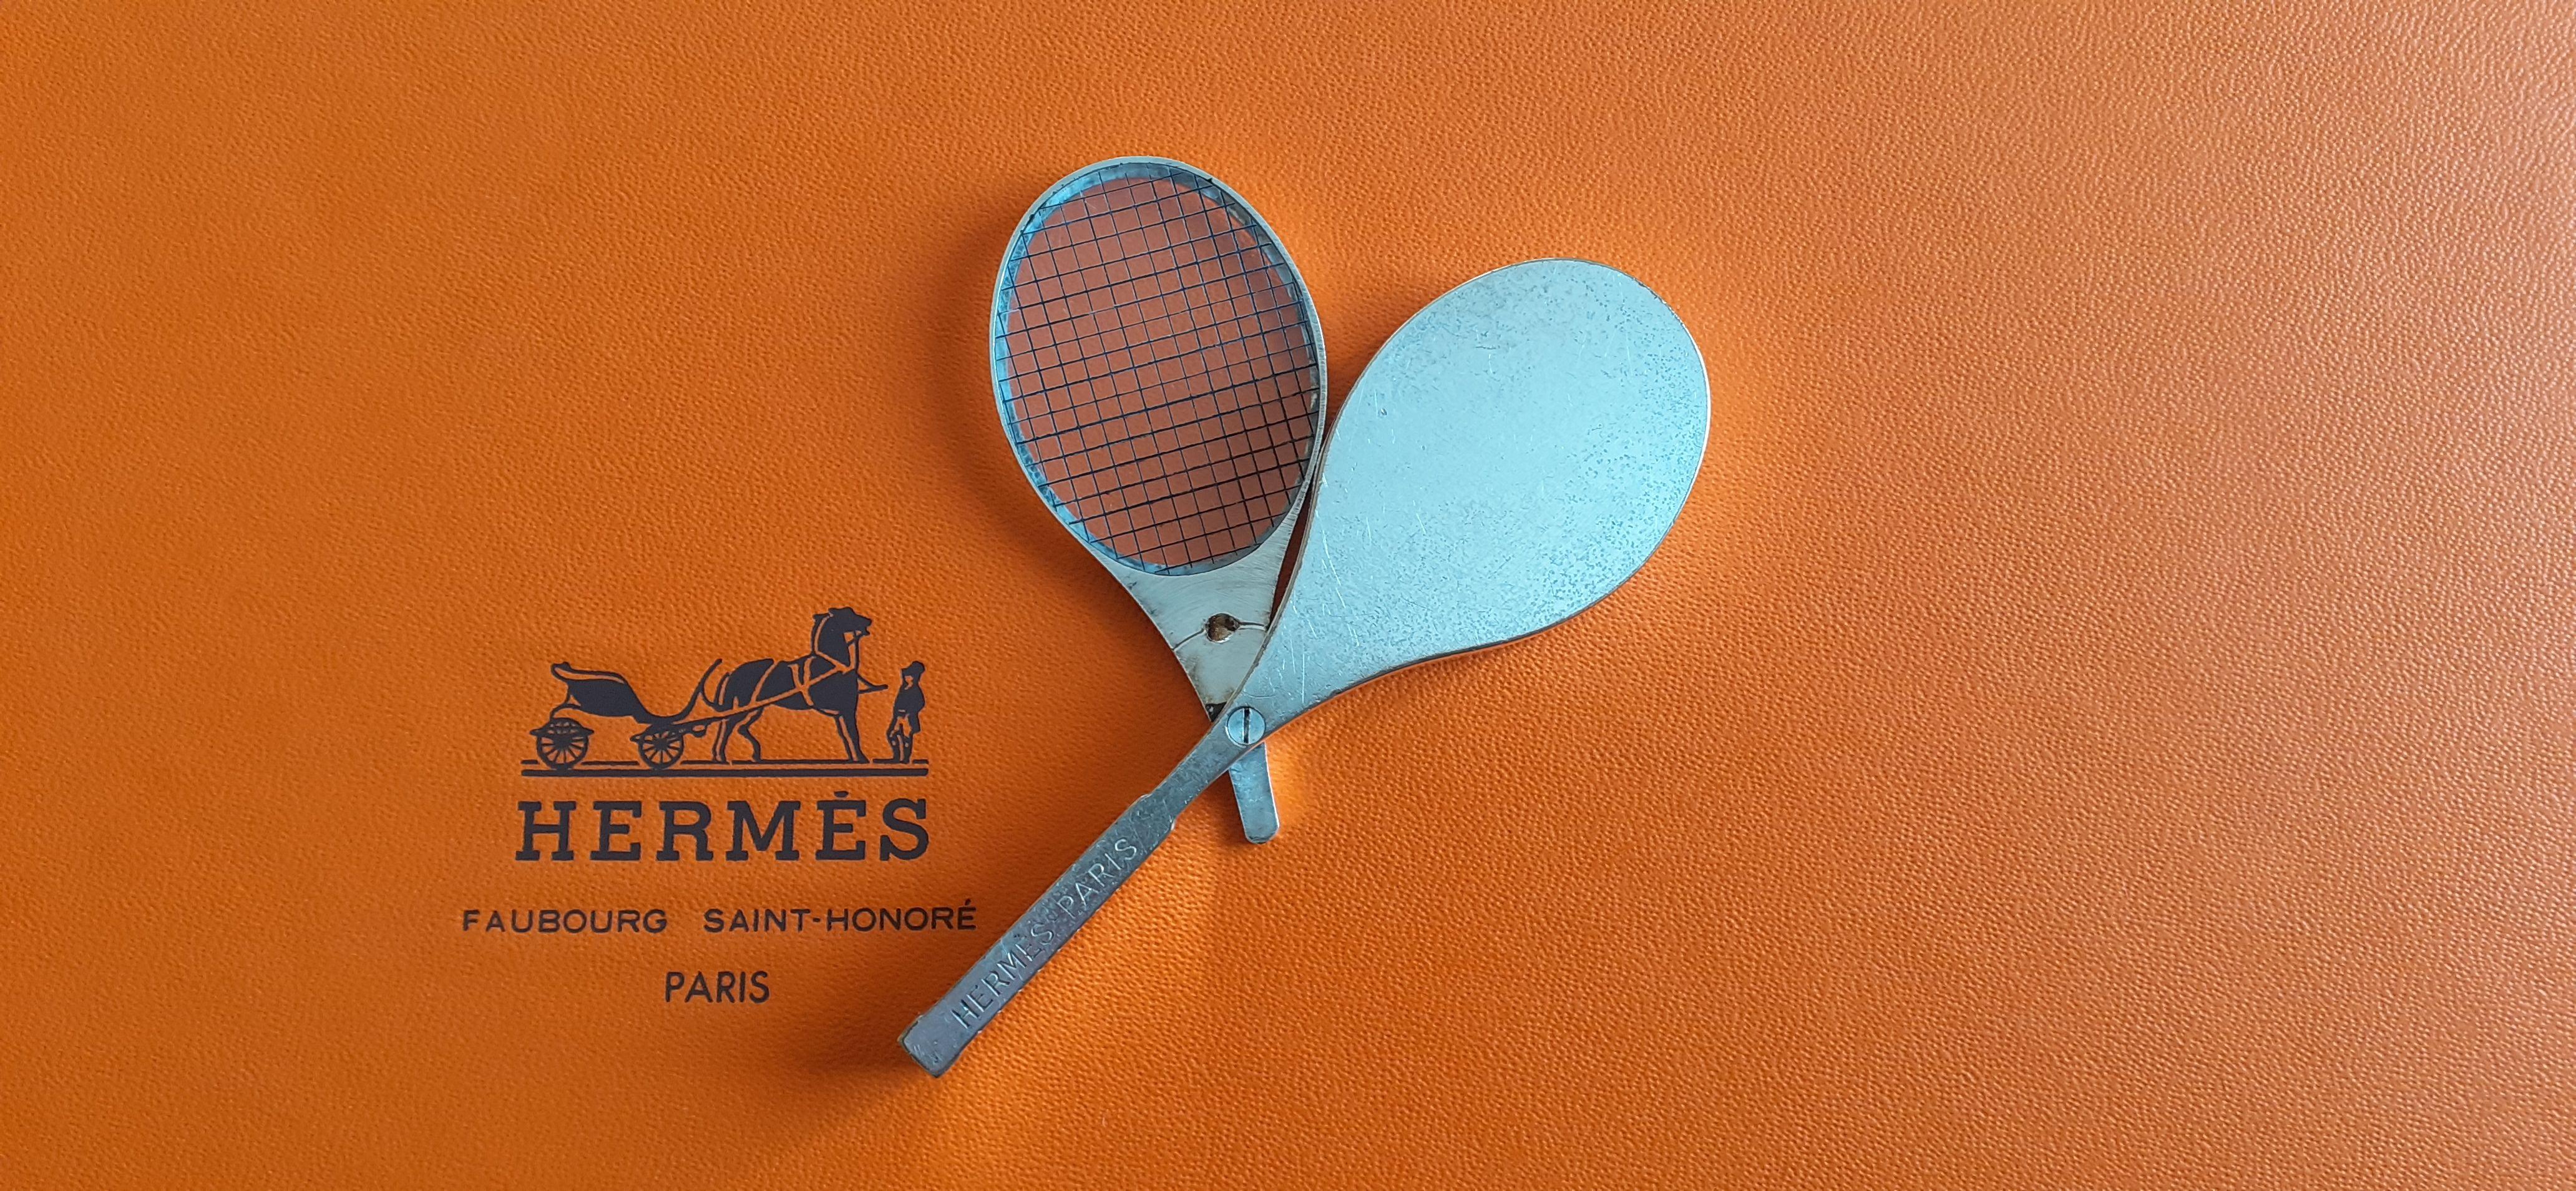 Exceptional Hermès Tennis Racquet Shaped Pill Box Rare For Sale 5